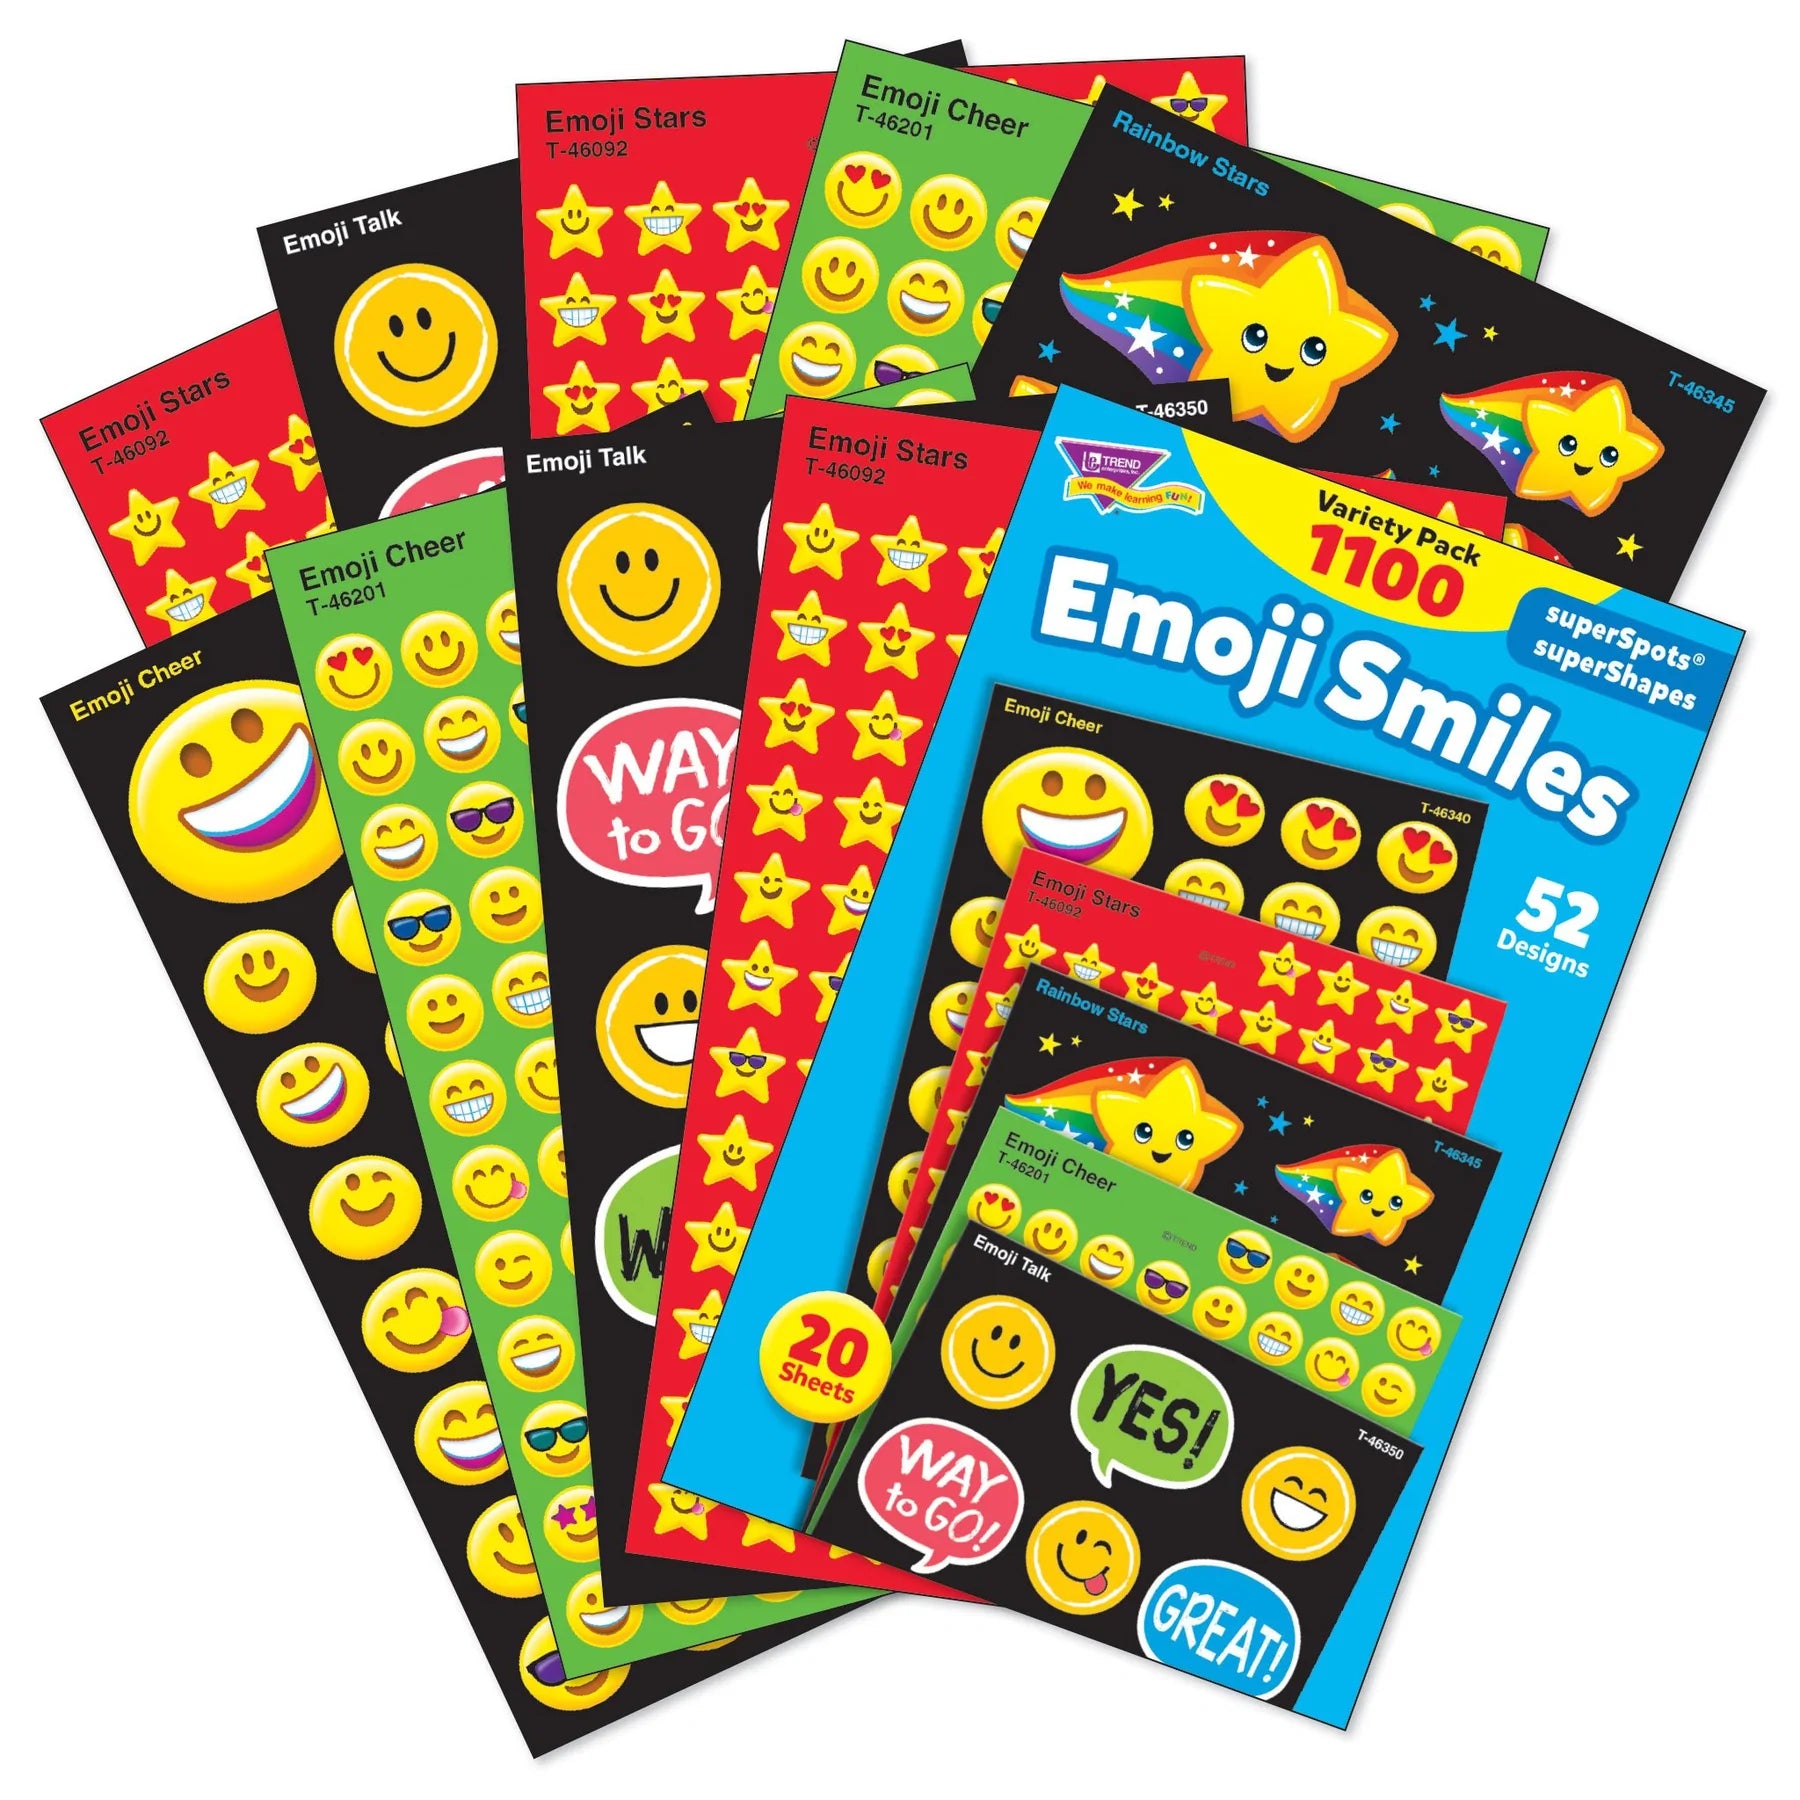 Emoji Smiles superSpots® & superShapes Stickers Variety Pack